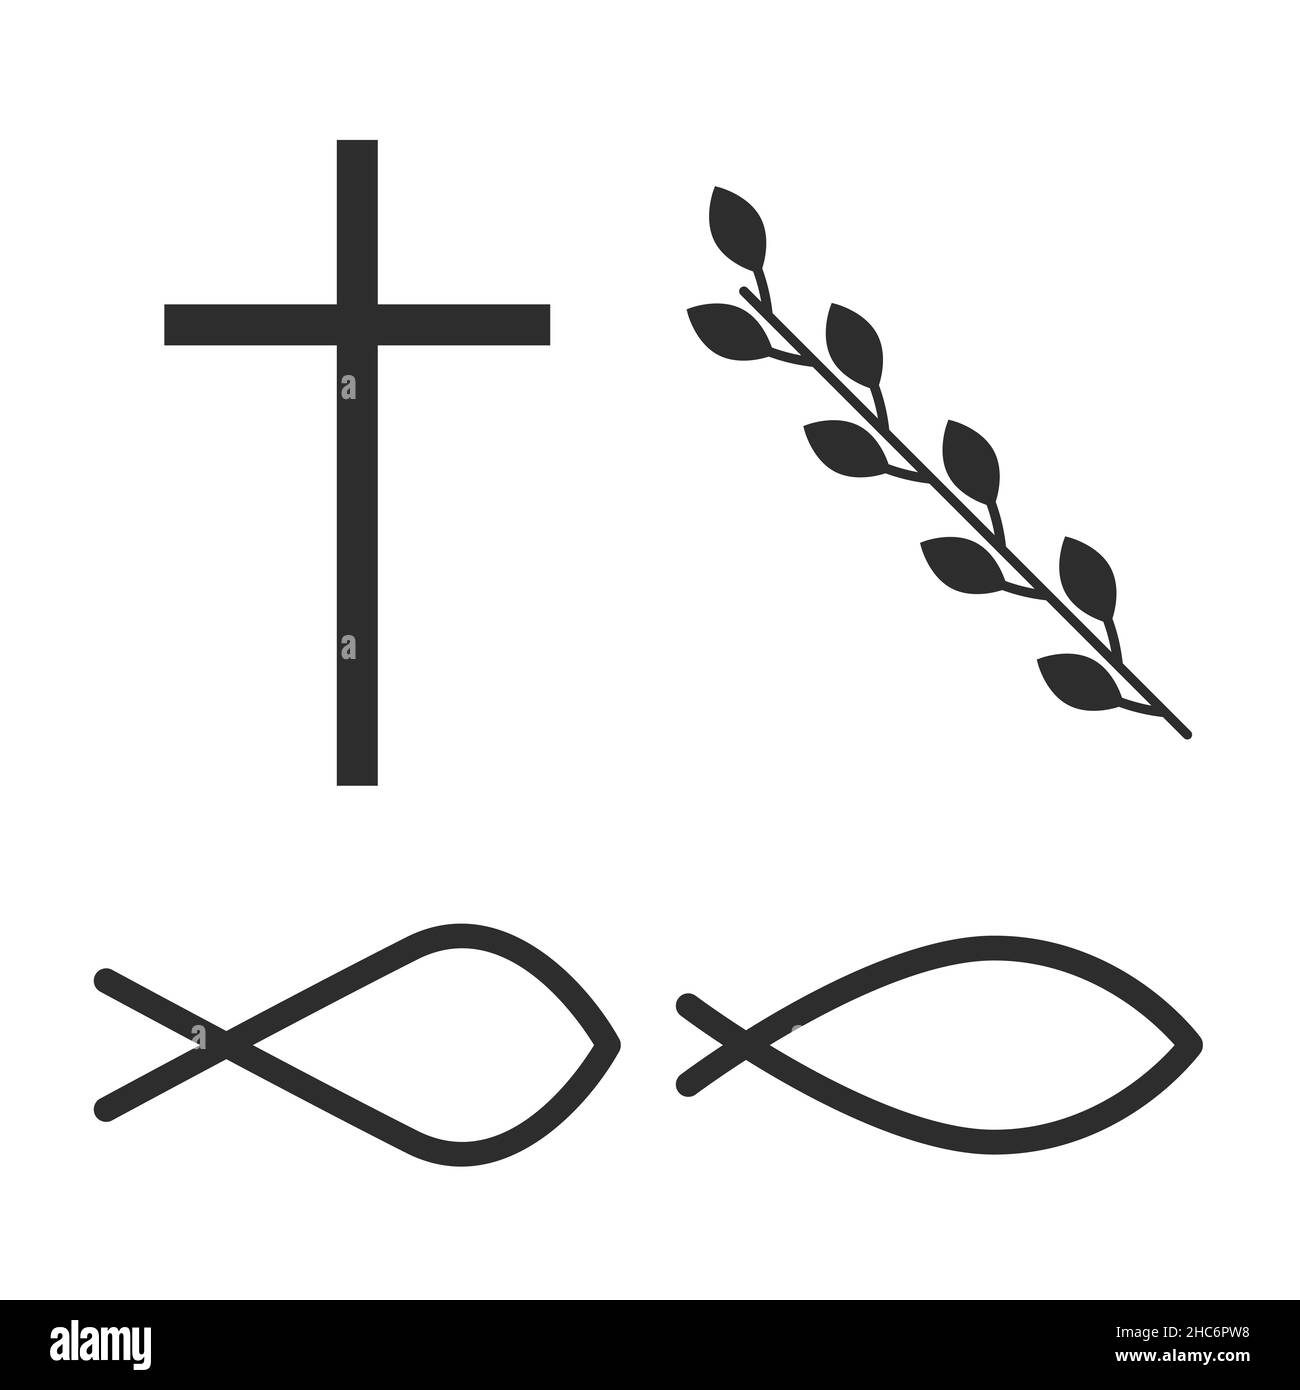 Cross, vine and fish. Symbols of Jesus Christ. Flat isolated Christian illustration, biblical background. Stock Photo